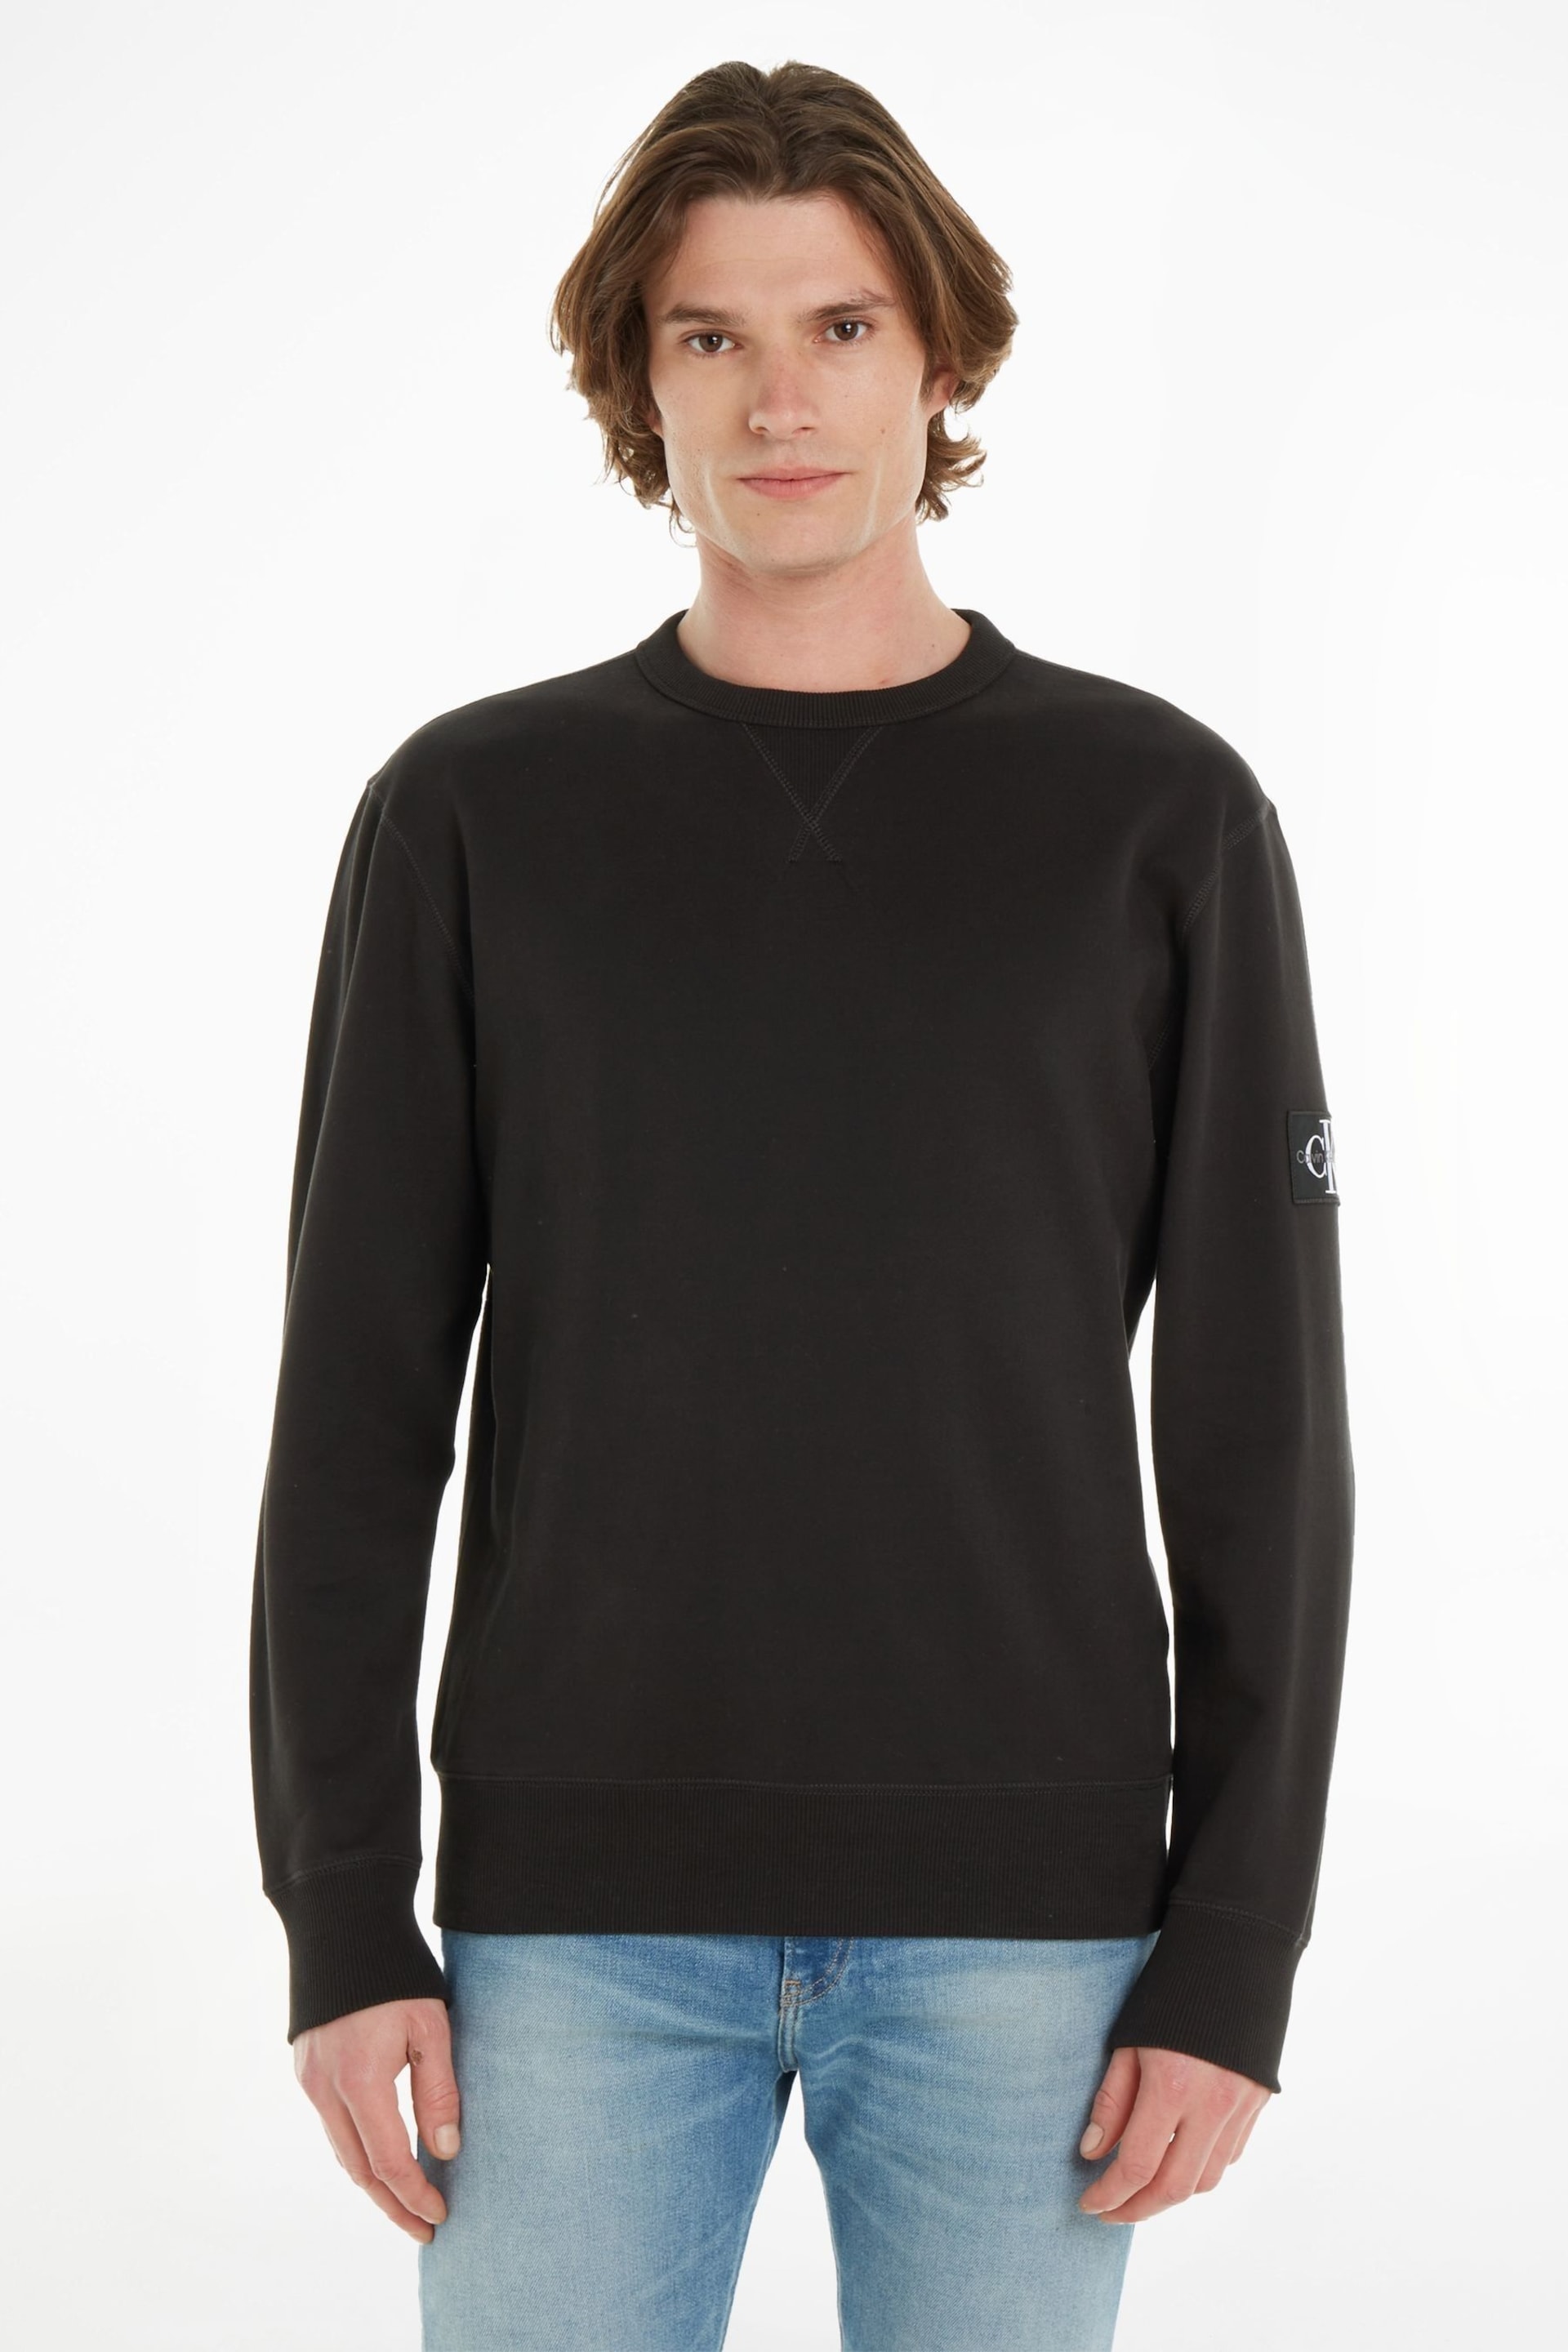 Calvin Klein Jeans Monogram Badge Logo Crew Neck Black Sweatshirt - Image 1 of 6